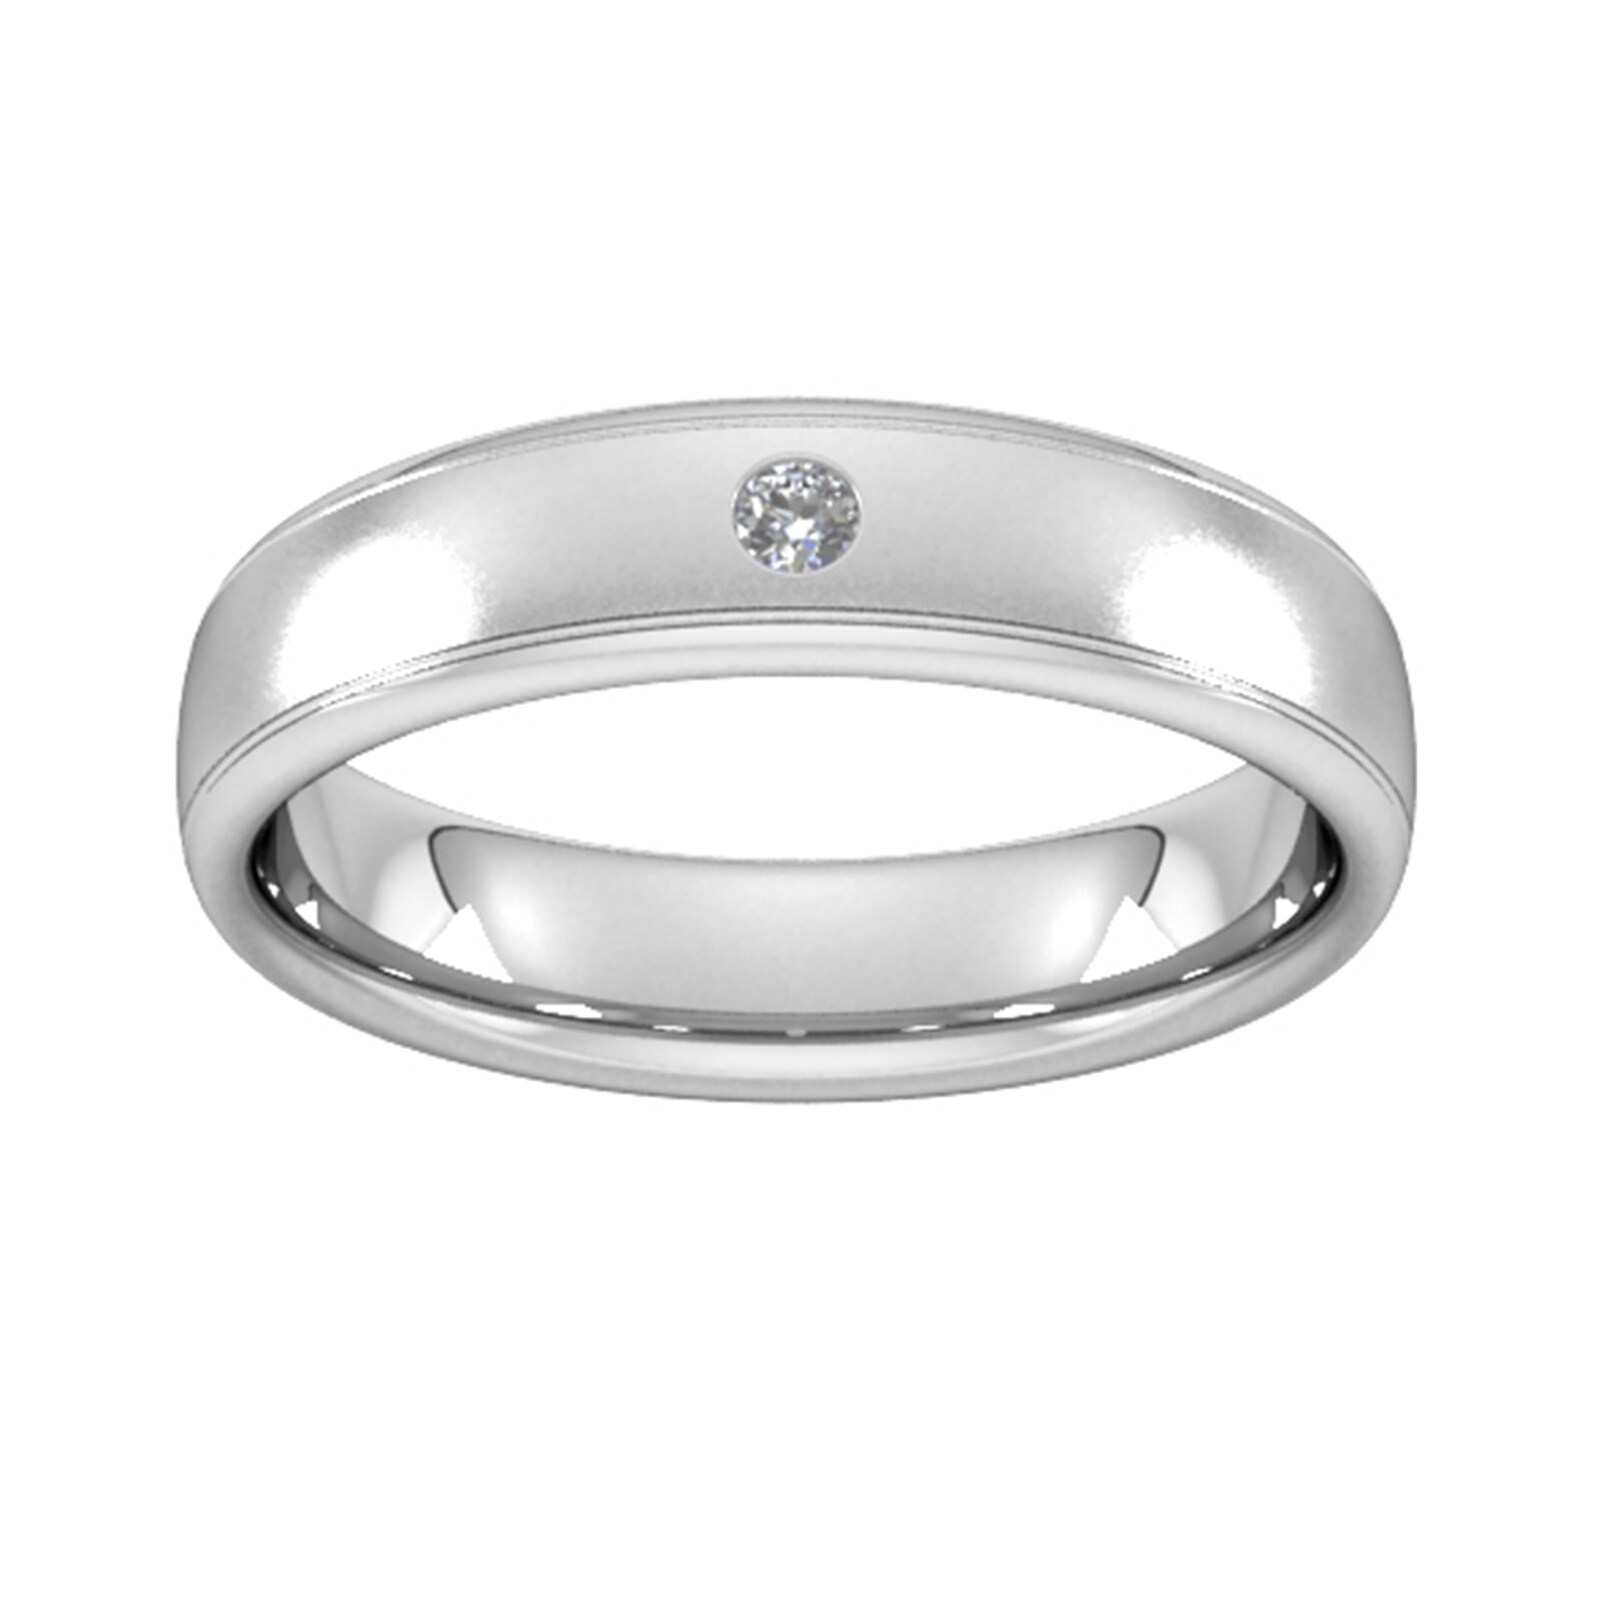 5mm Brilliant Cut Diamond Set Wedding Ring In 18 Carat White Gold - Ring Size Q